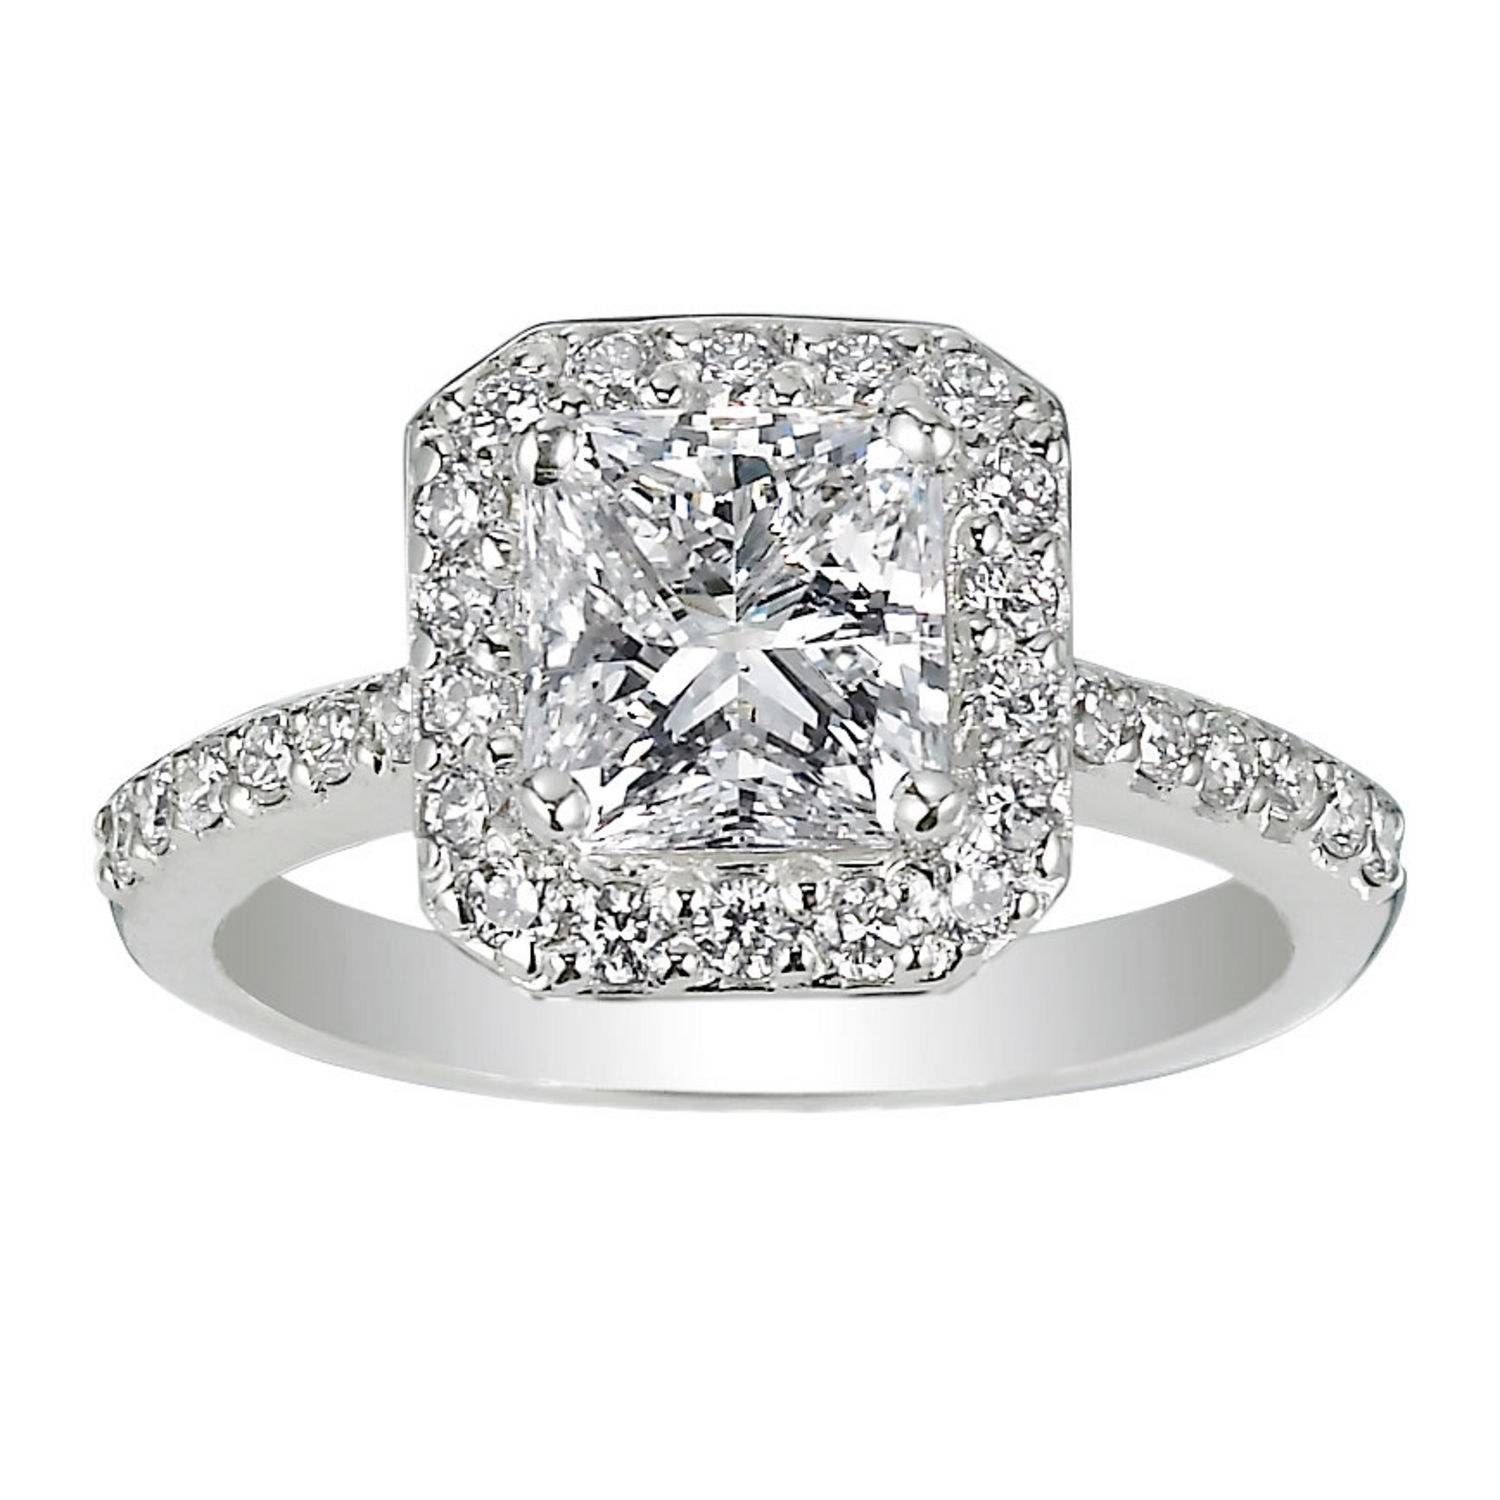 62 Diamond Engagement Rings Under $5,000 | Glamour Pertaining To Halo Diamond Wedding Rings (View 7 of 15)